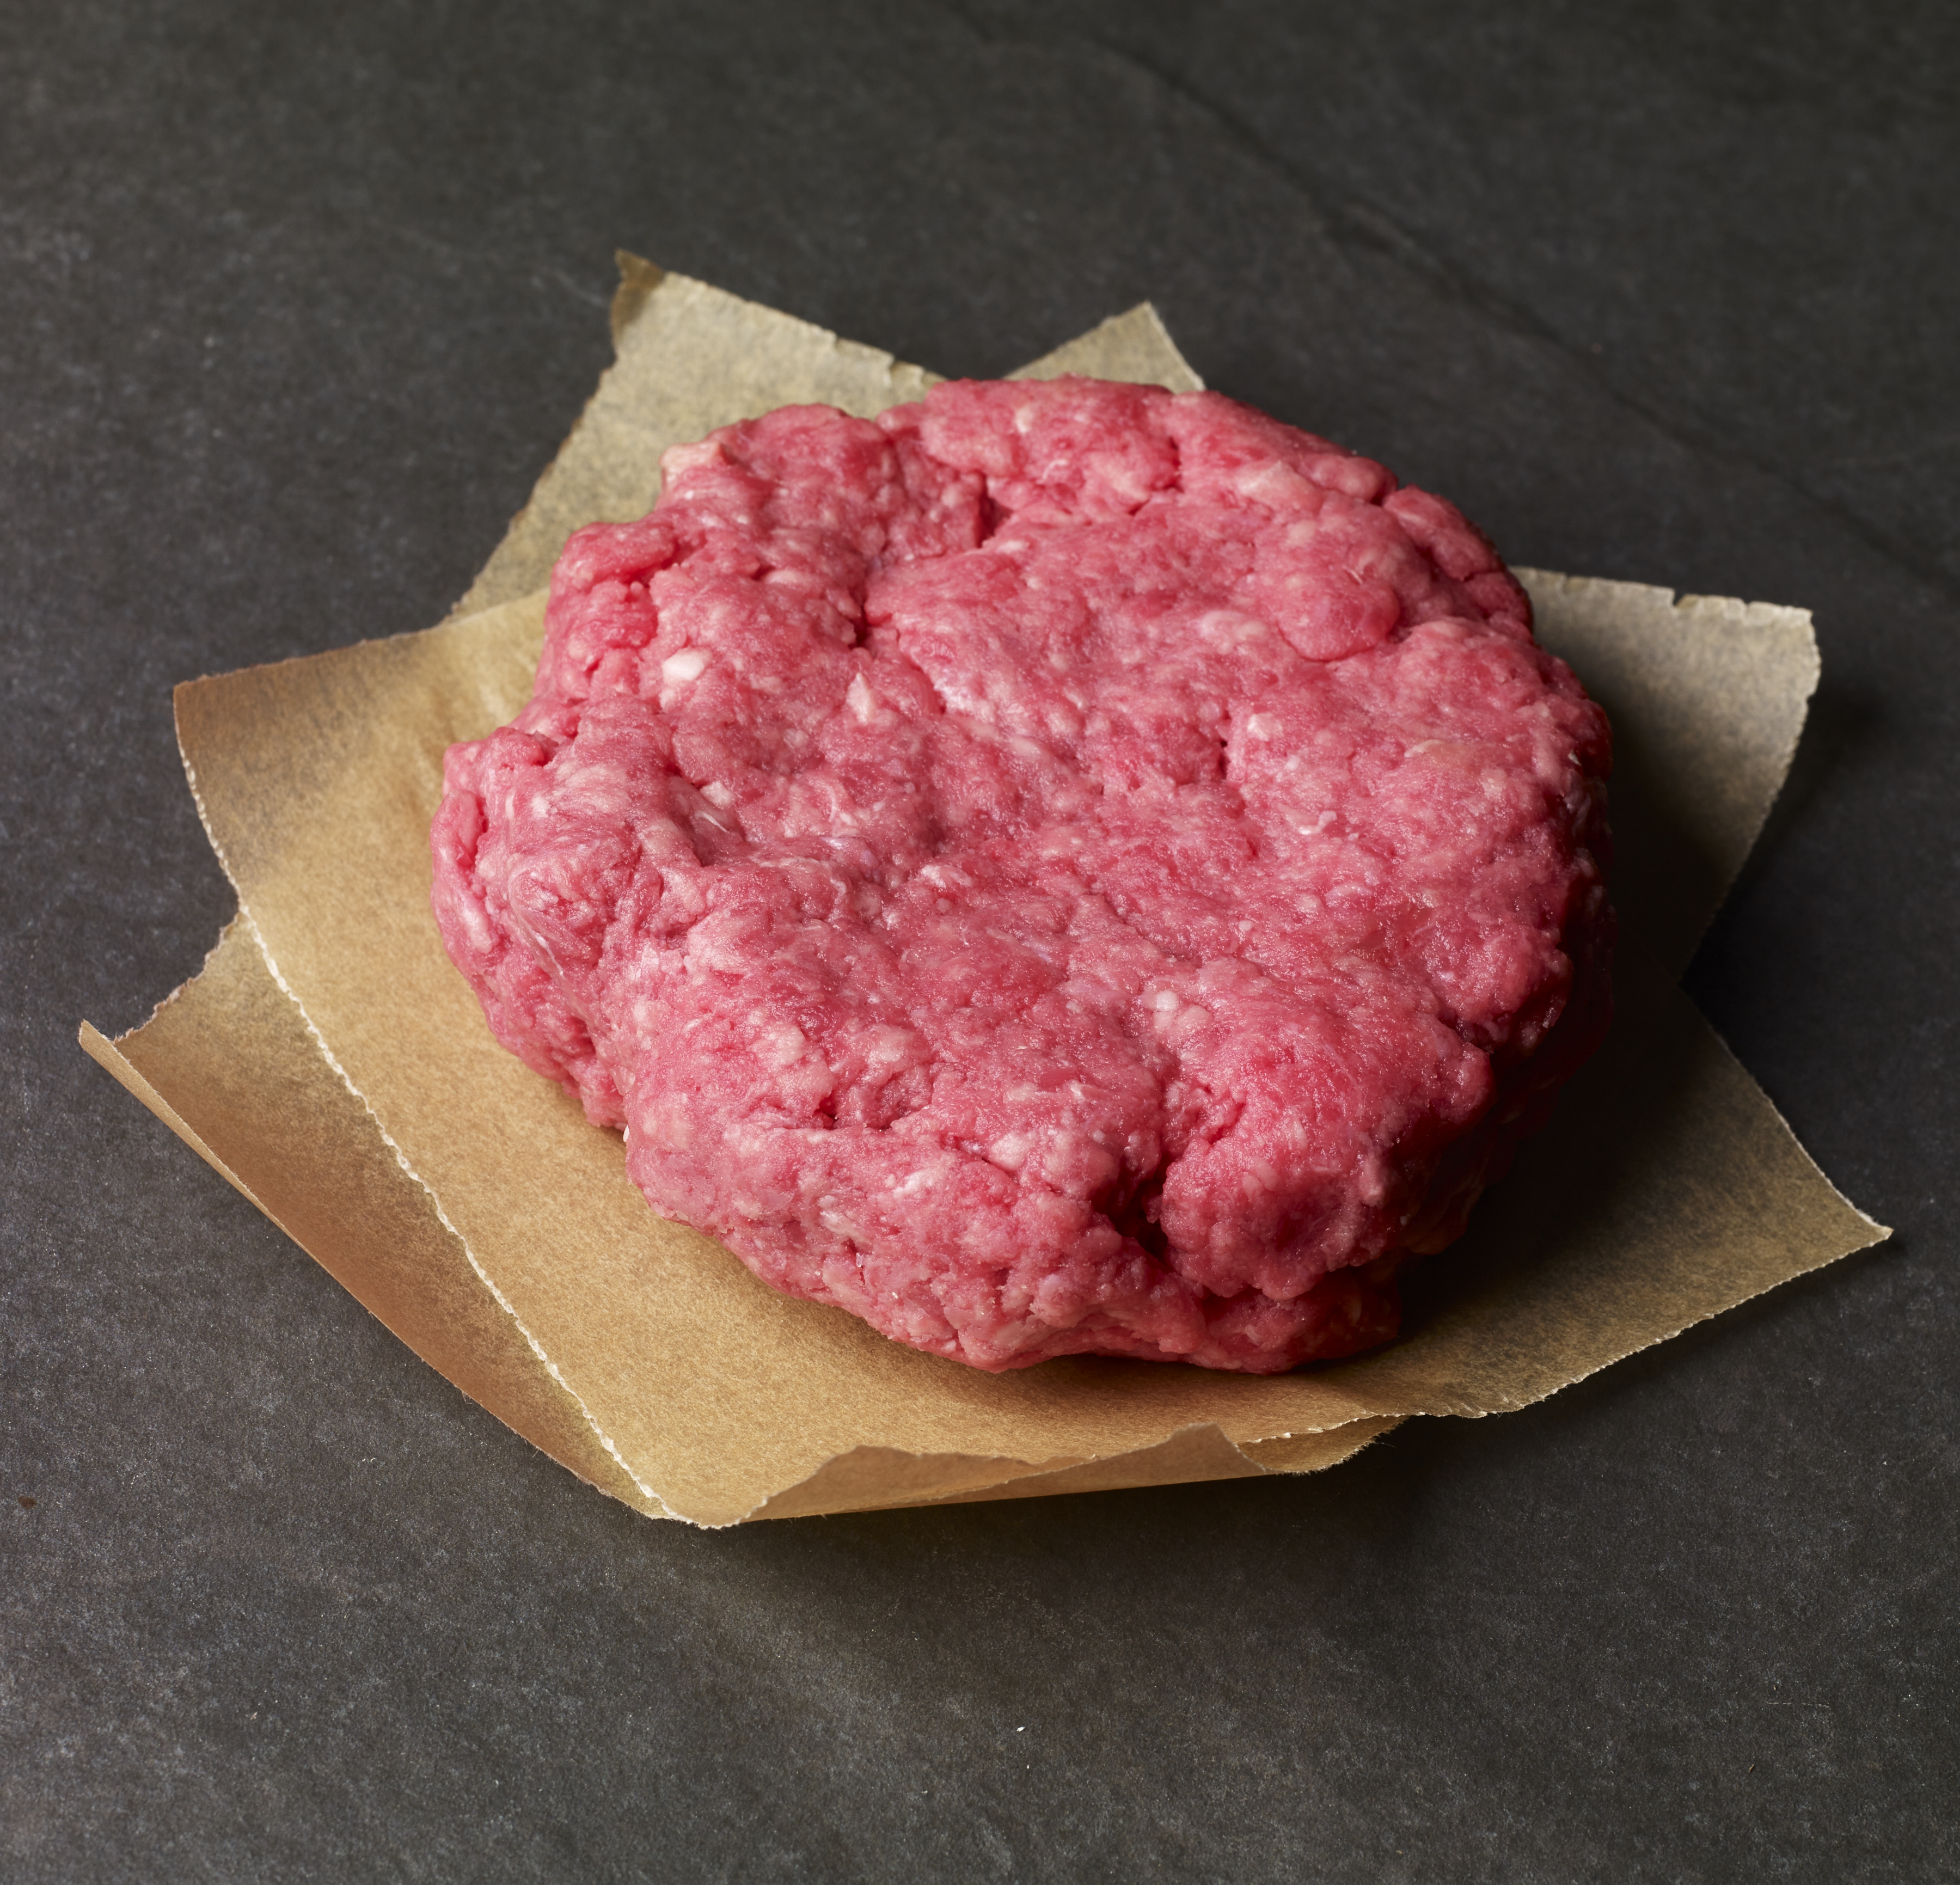 USDA Prime Filet Mignon Burger